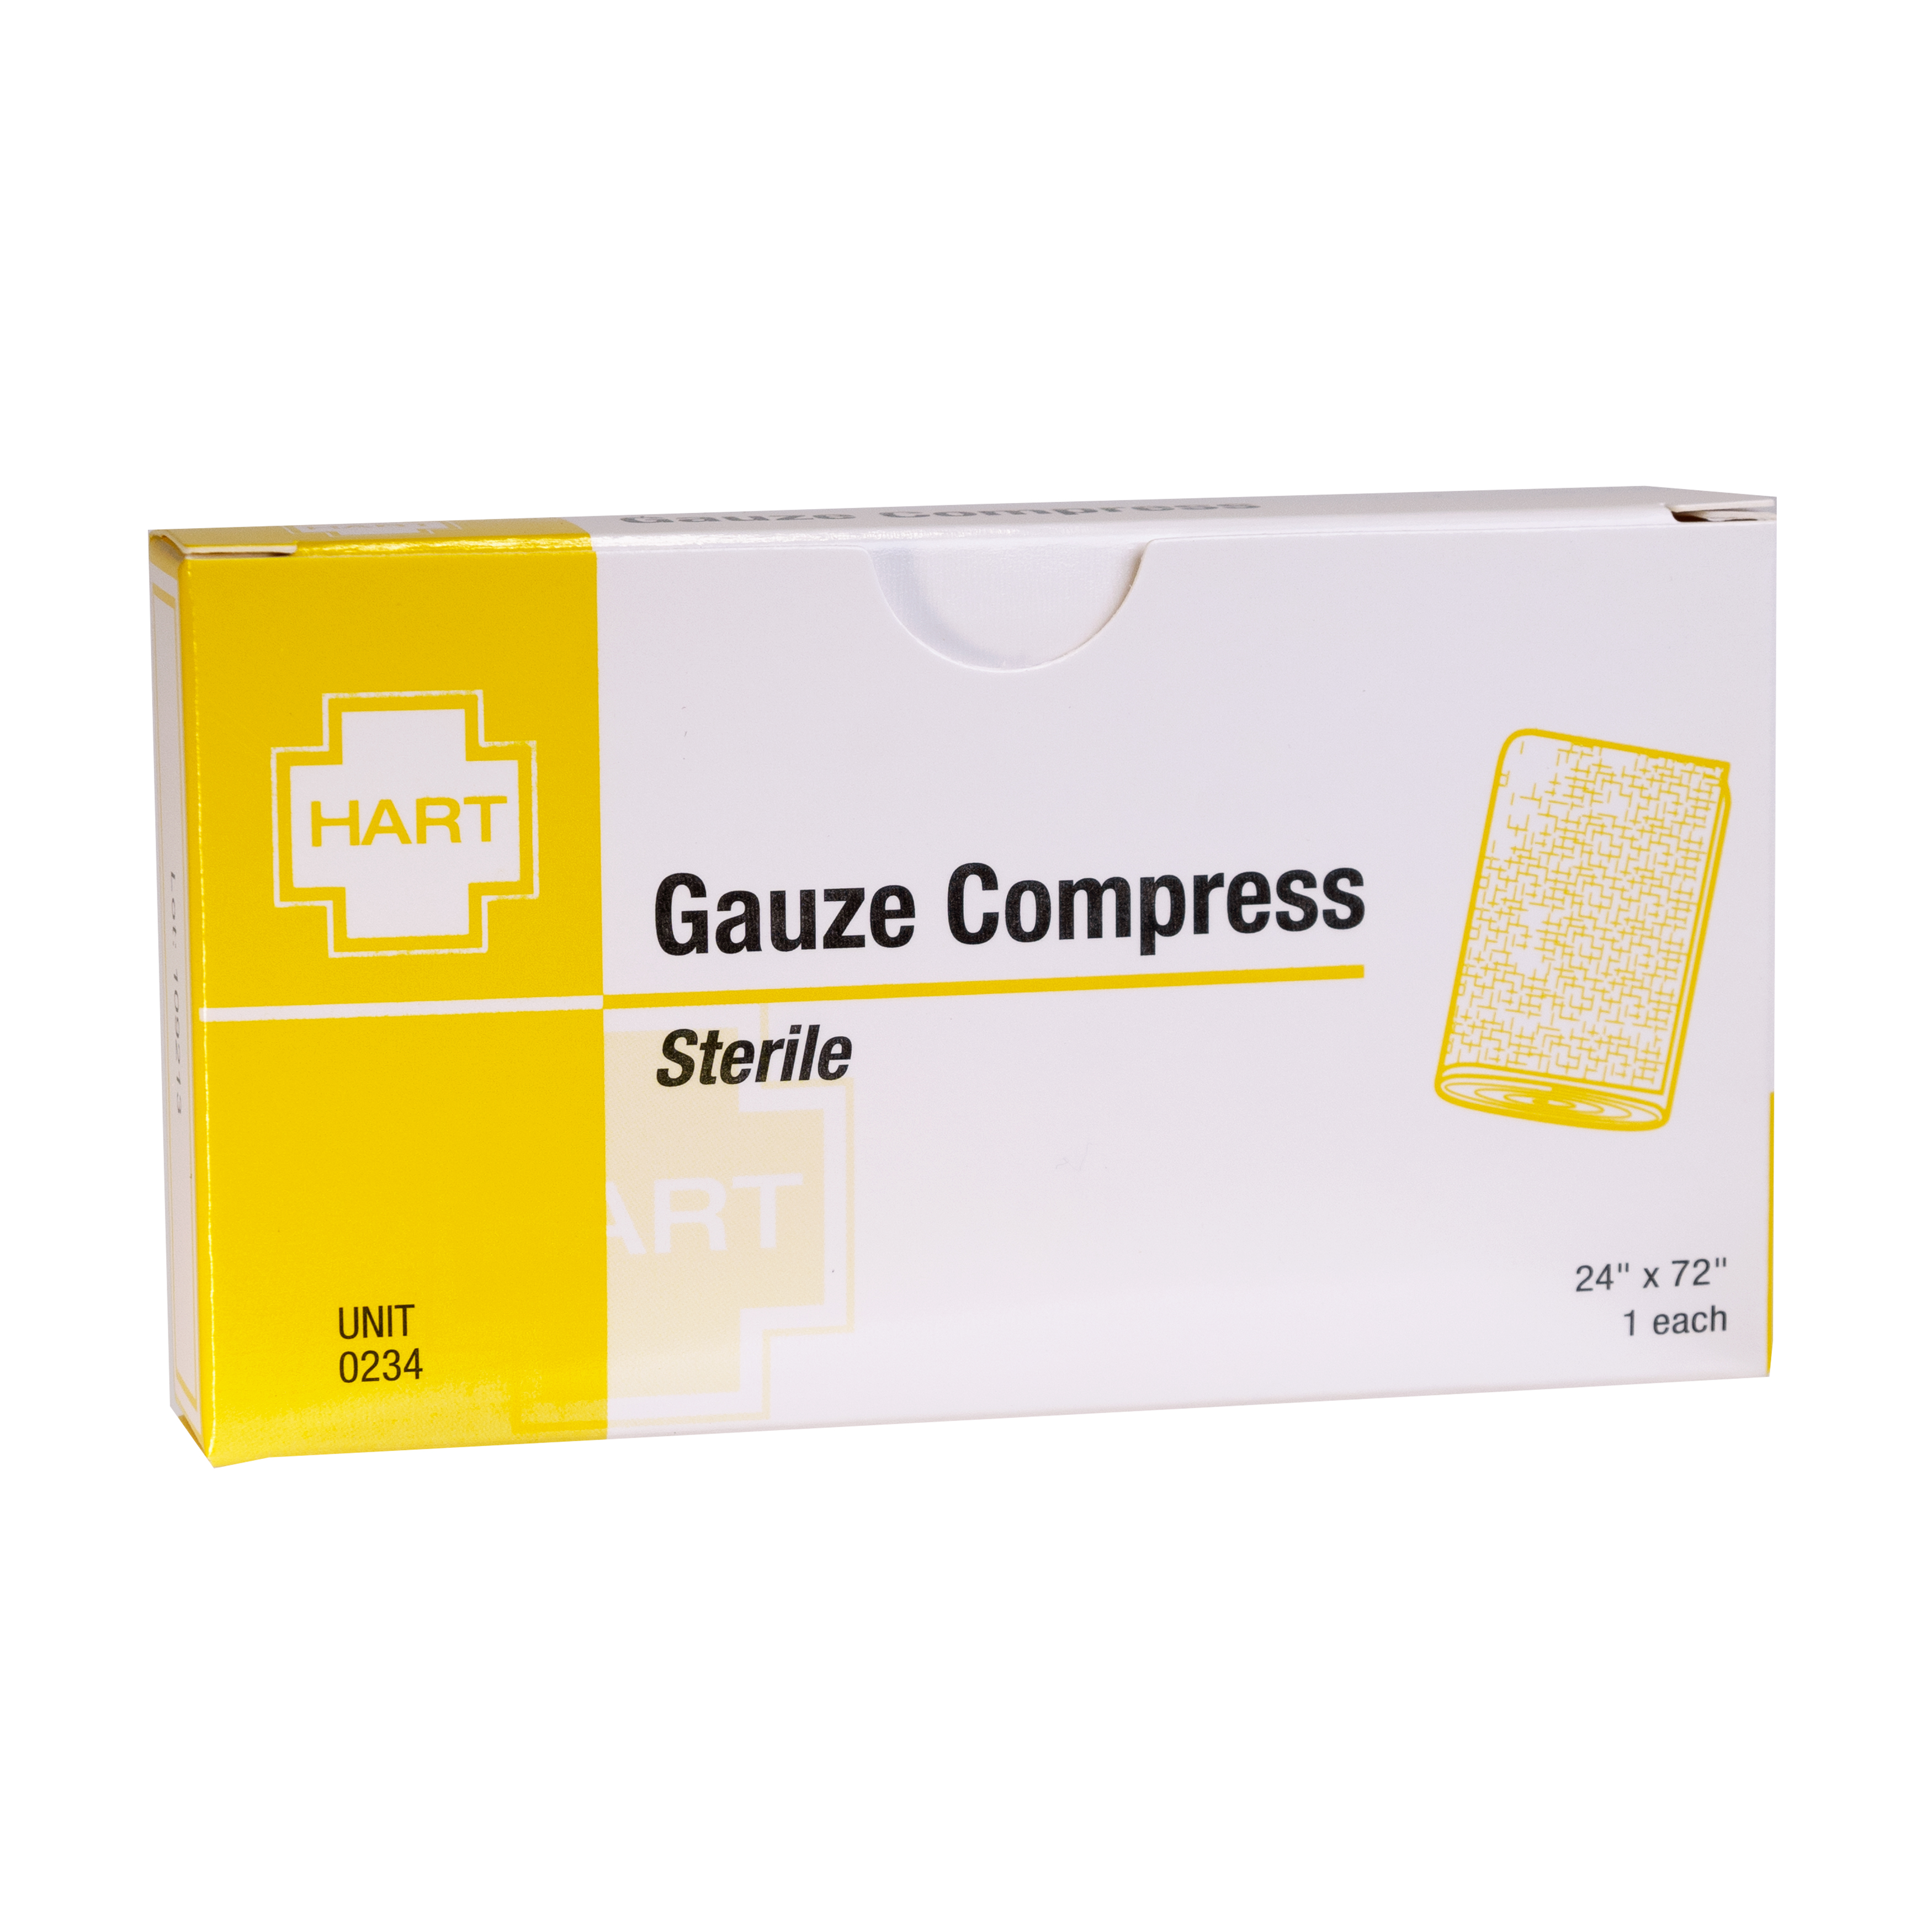 Sterile Gauze Compress, 24' x 72', 1 per unit